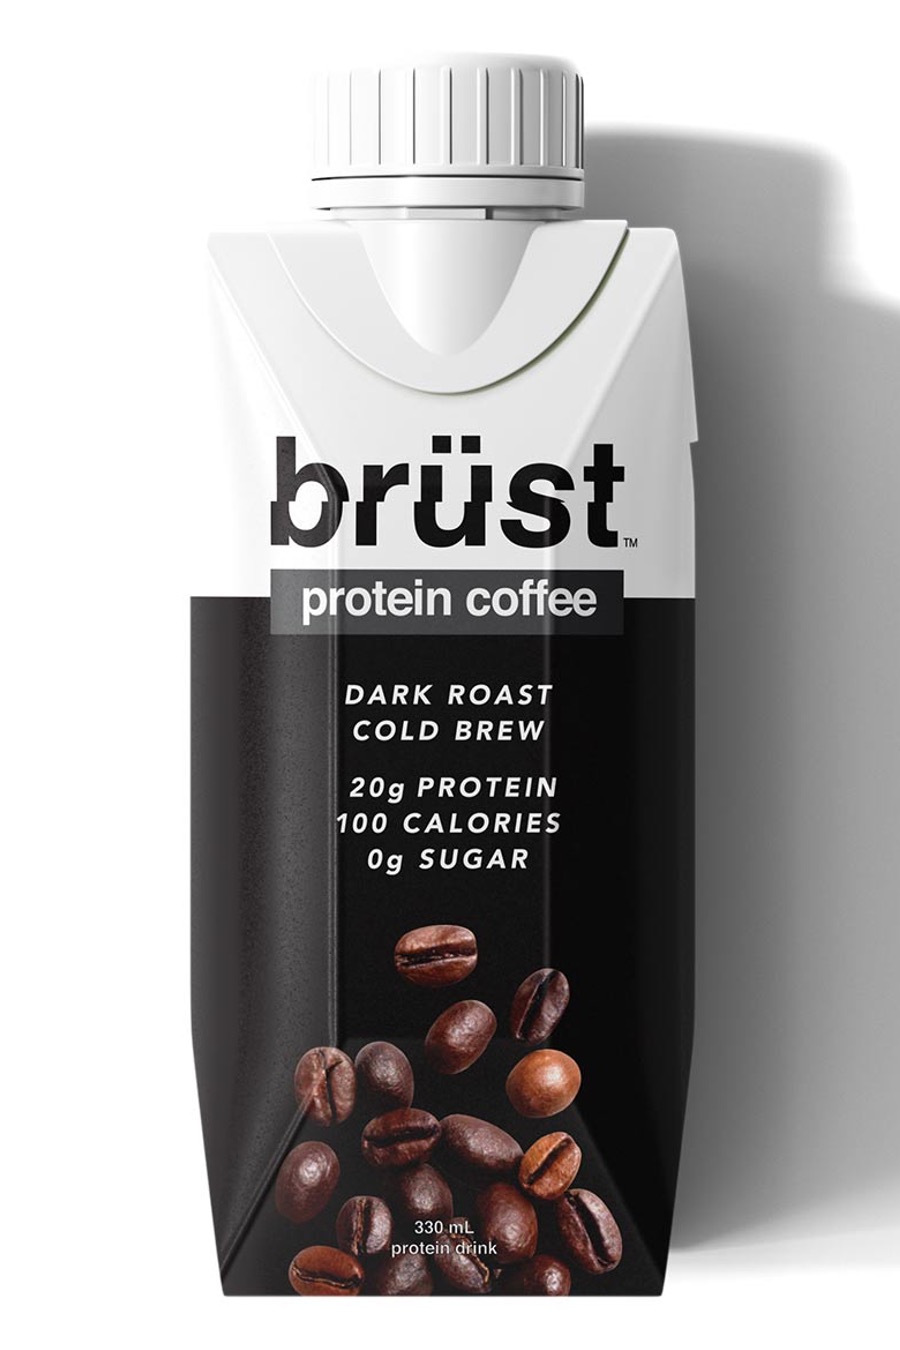 CHFA Brust protein coffee